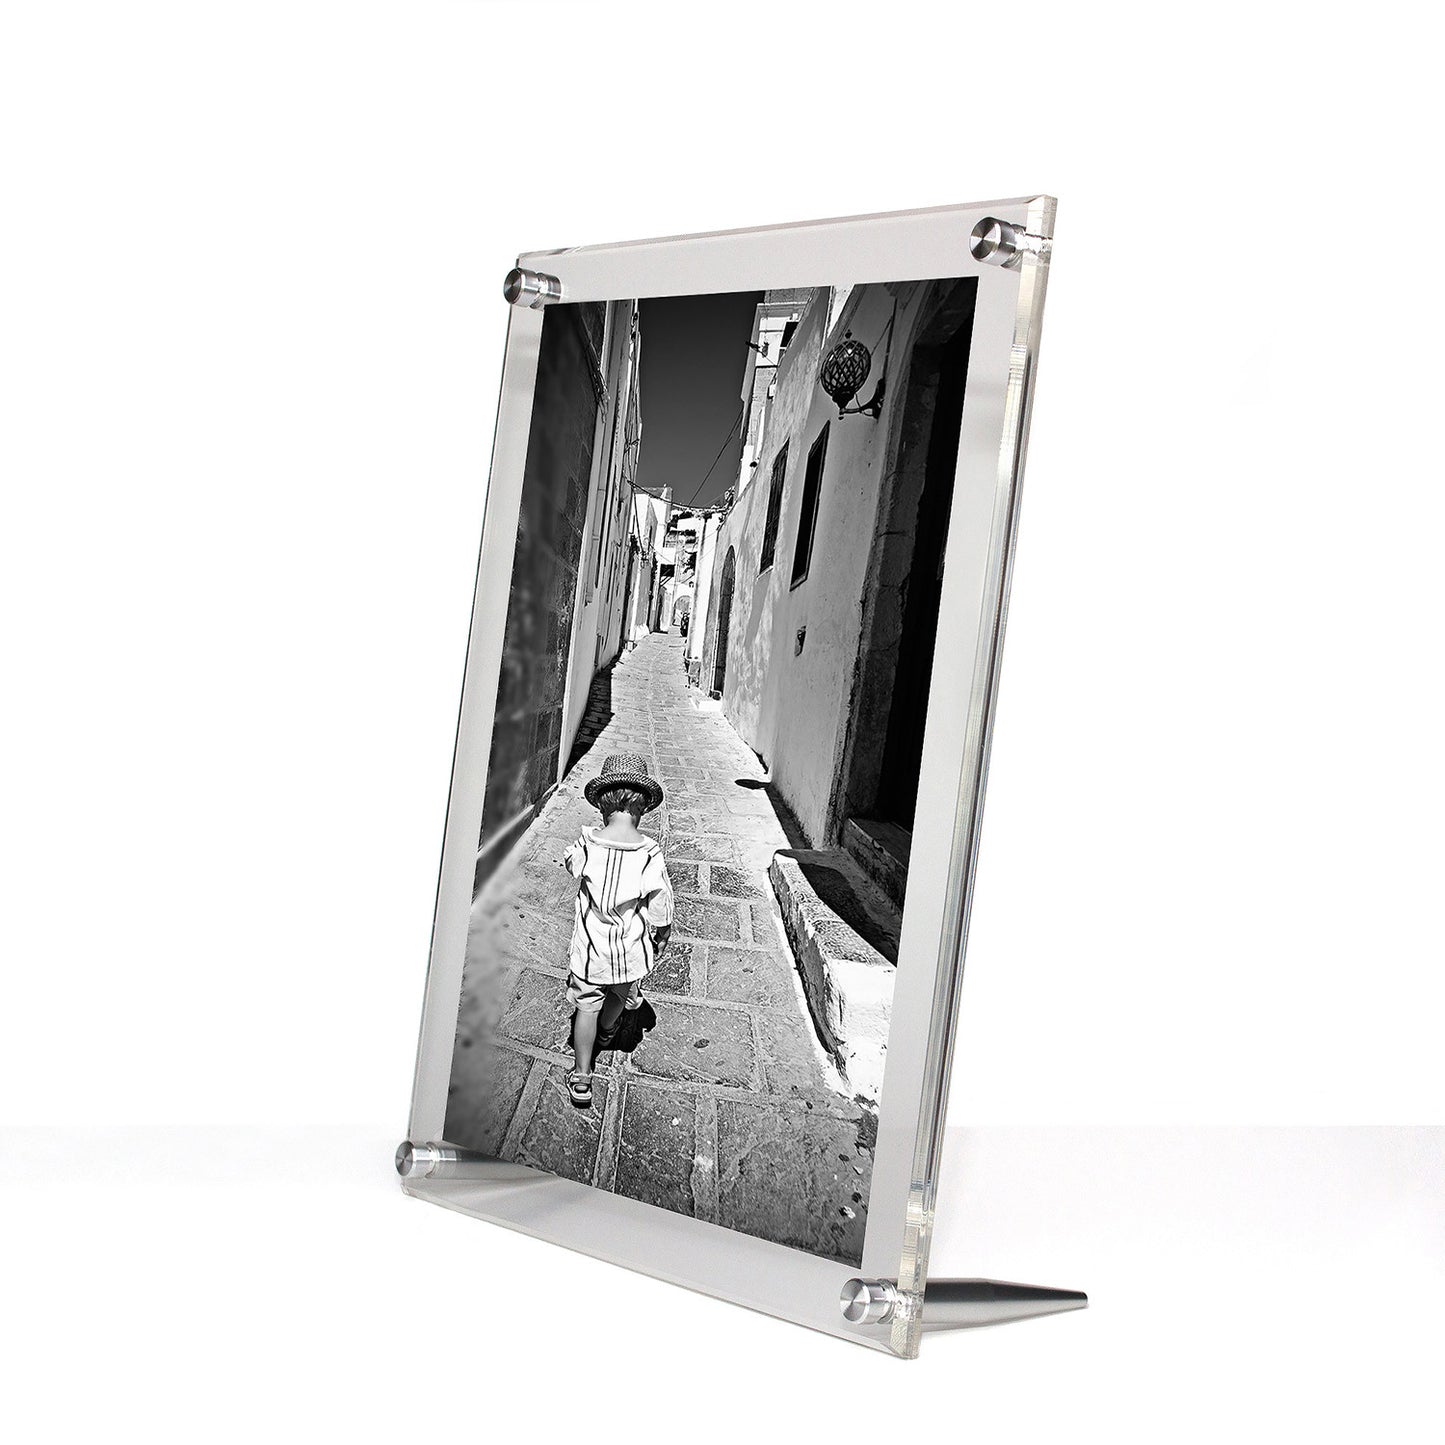 Acrylic Bevel Tabletop Float Frame for 8x10" photos